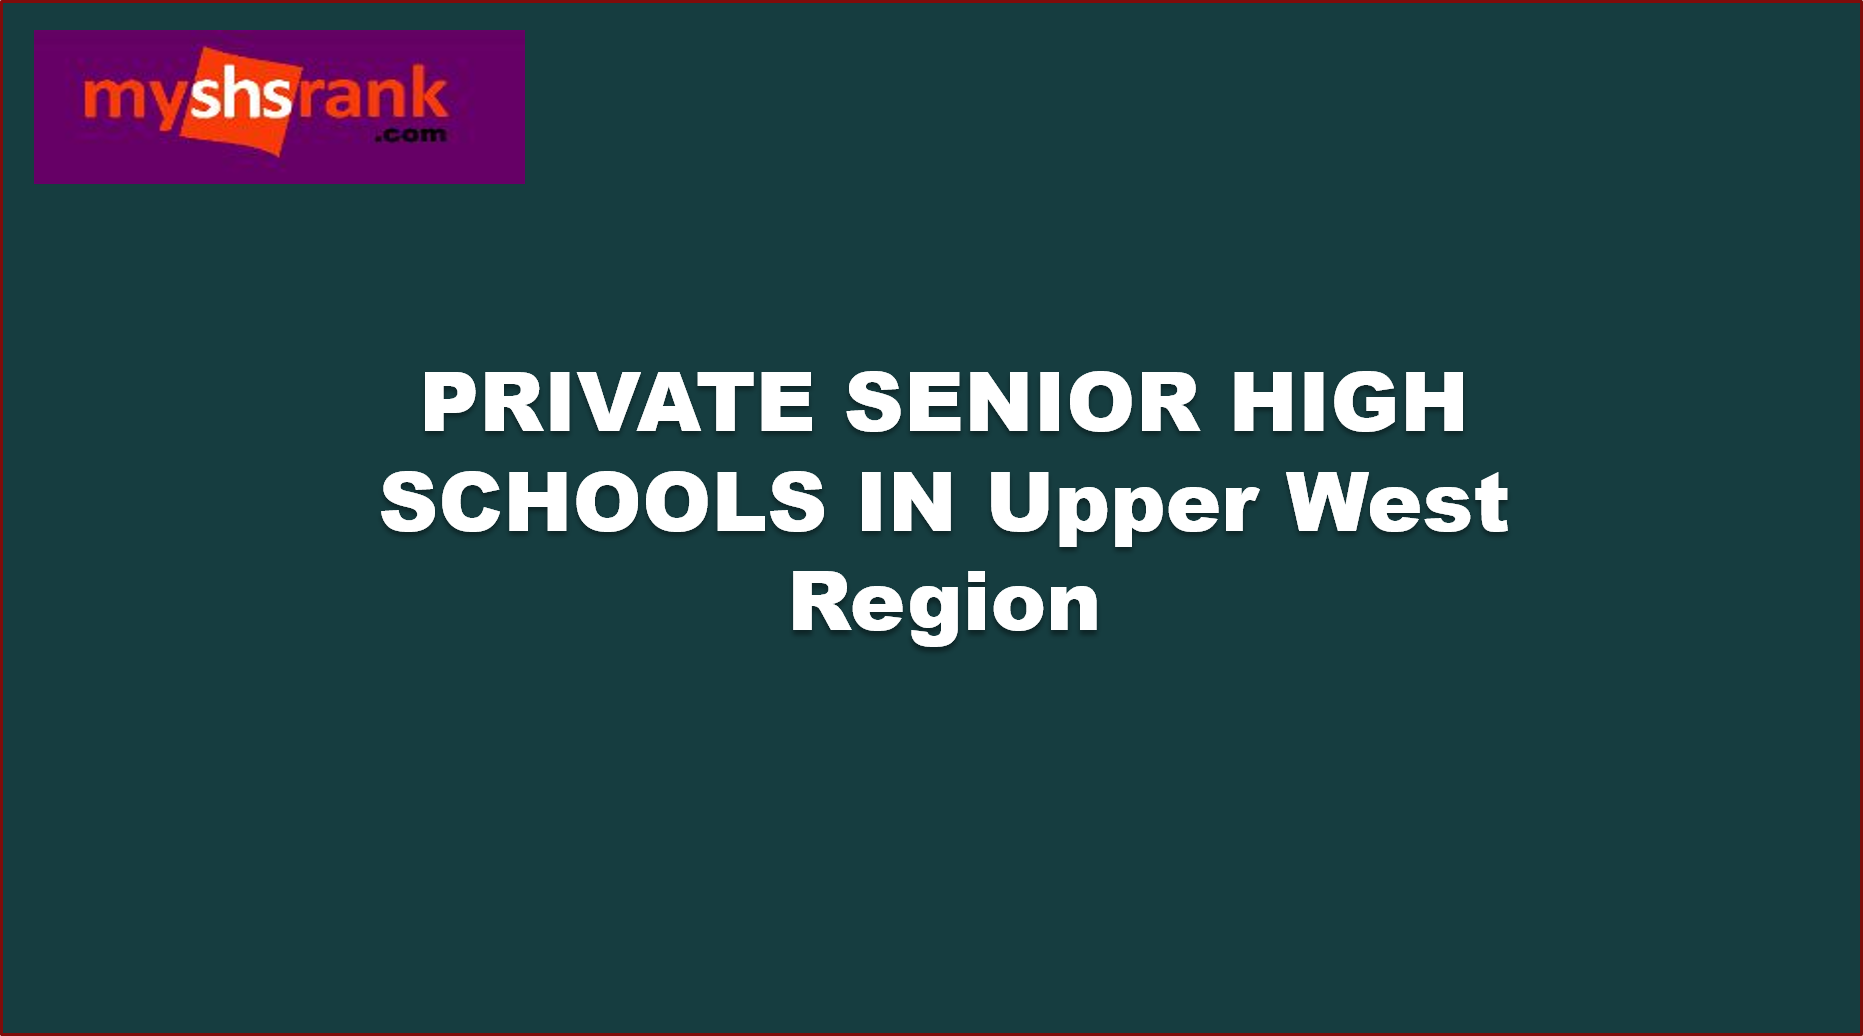 Private senior high schools in upper west region